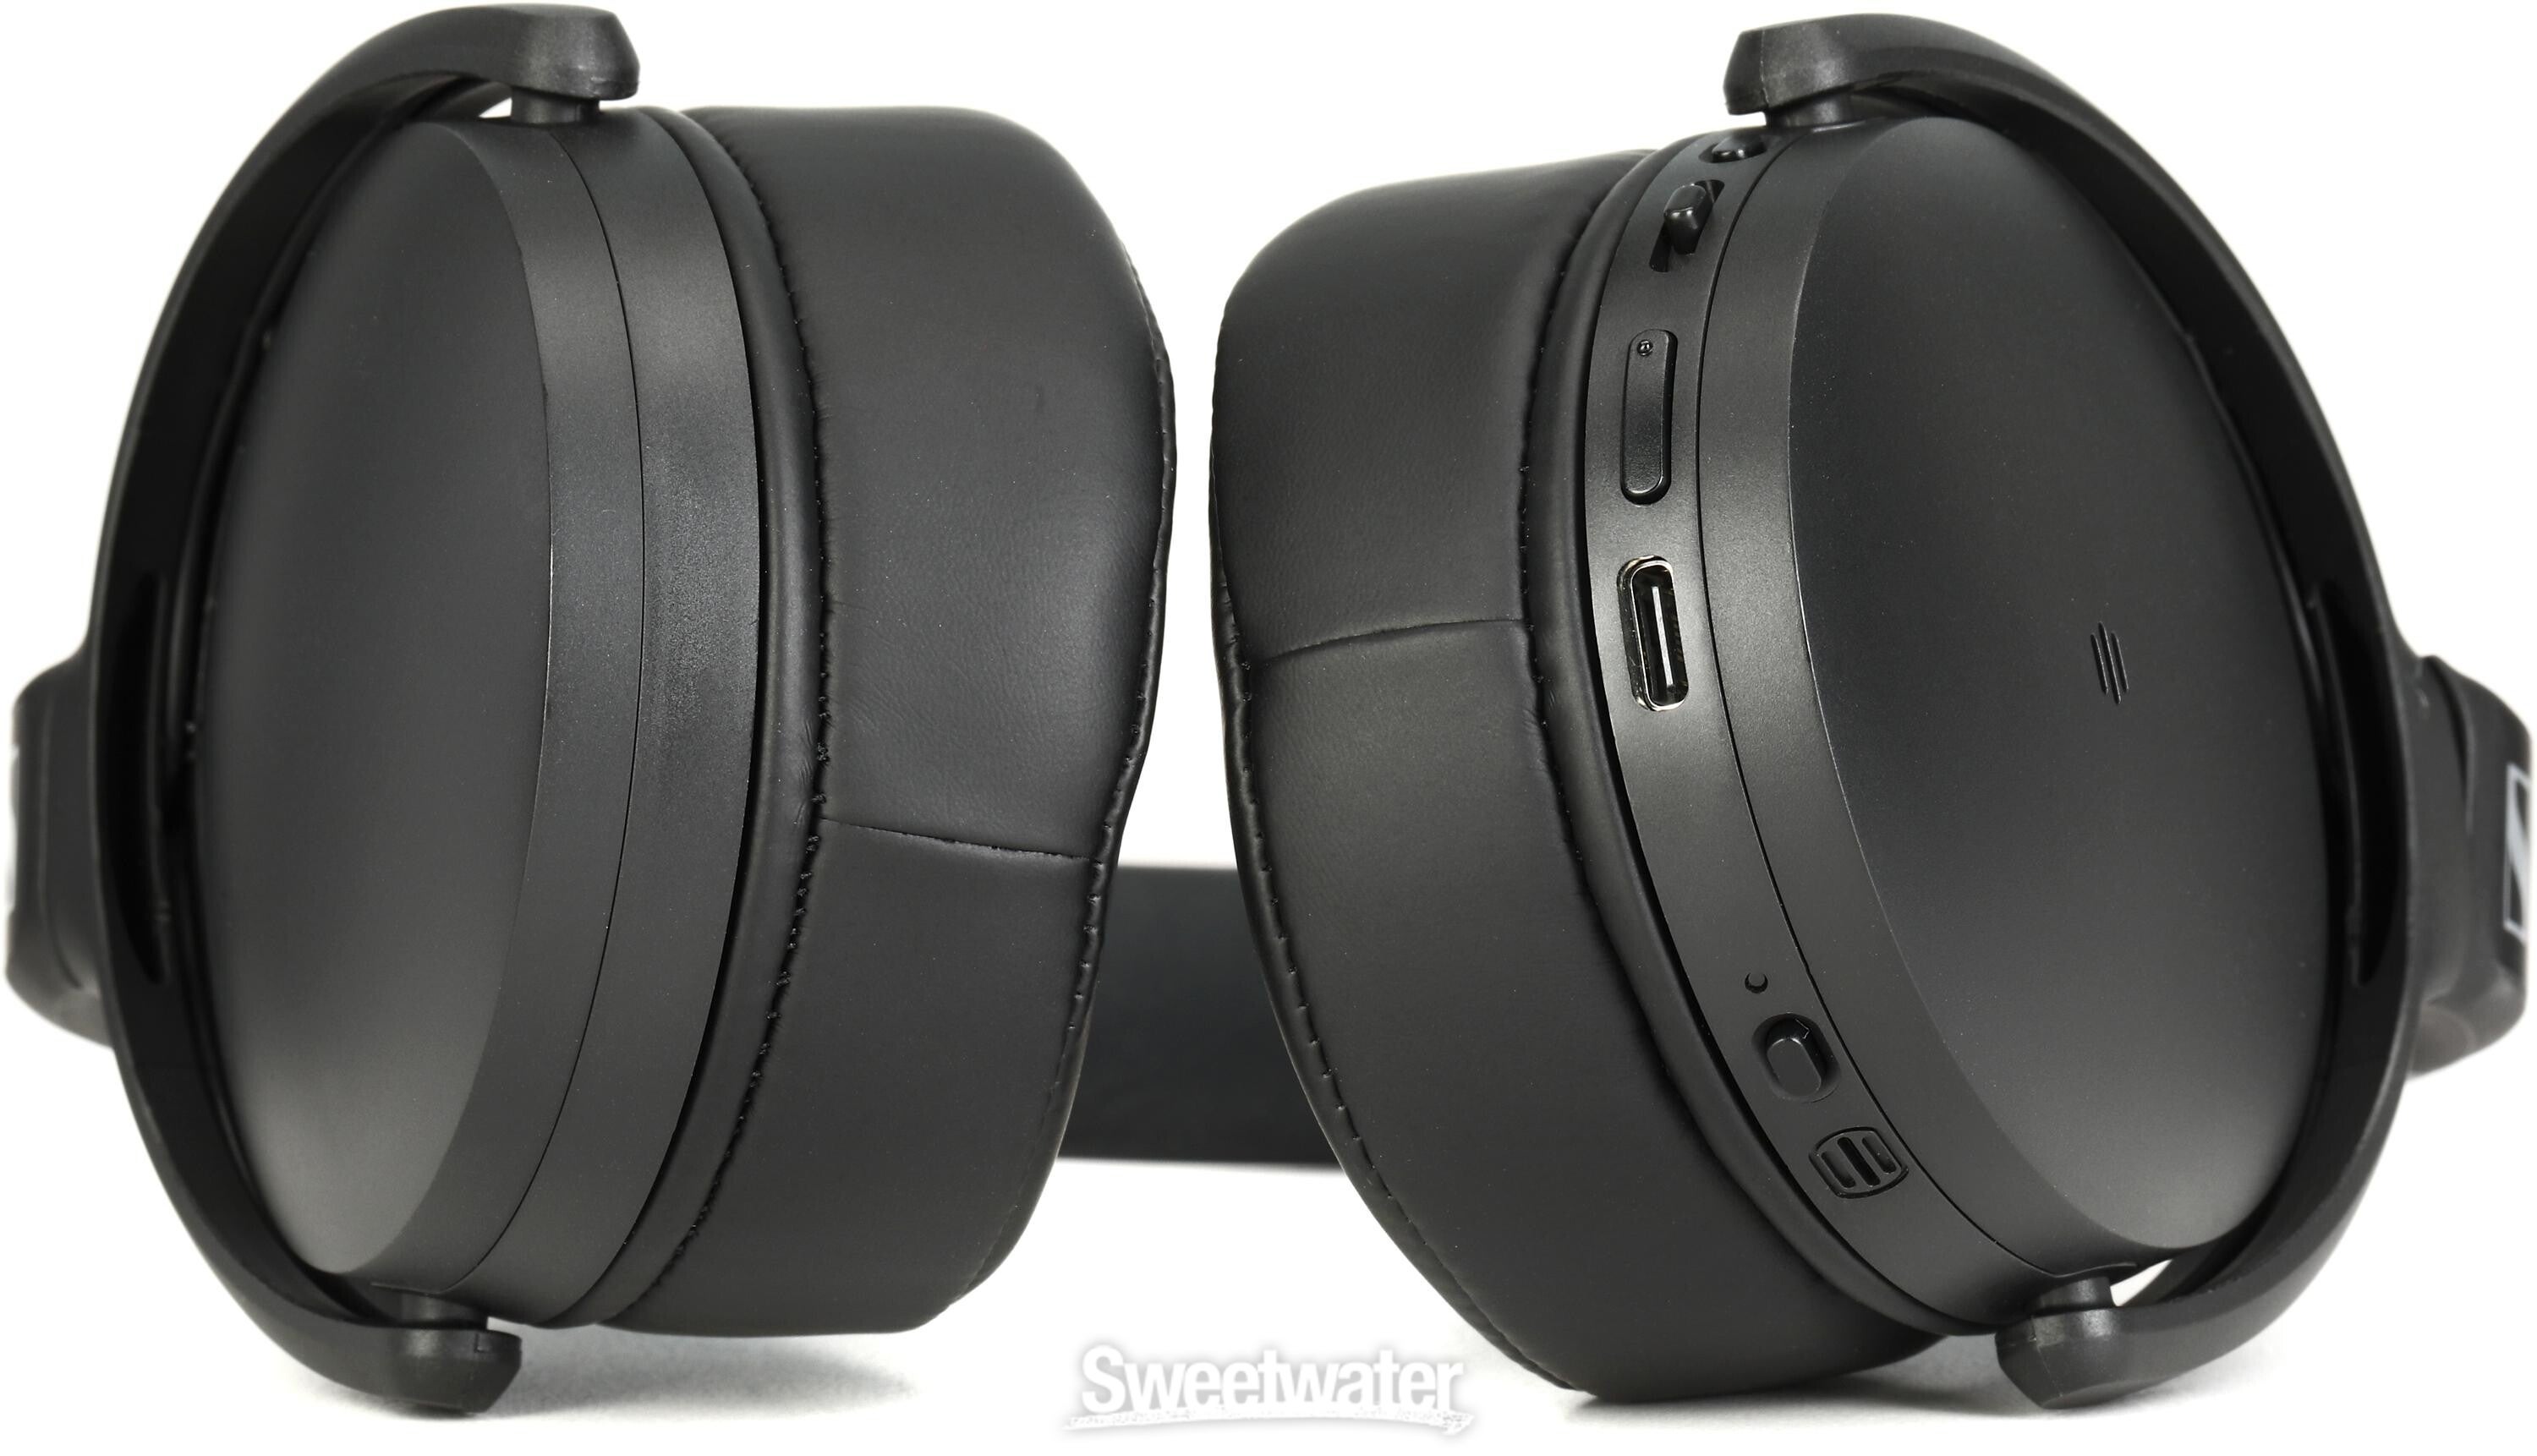 Sennheiser HD 350BT Bluetooth Wireless Headphones - Black | Sweetwater